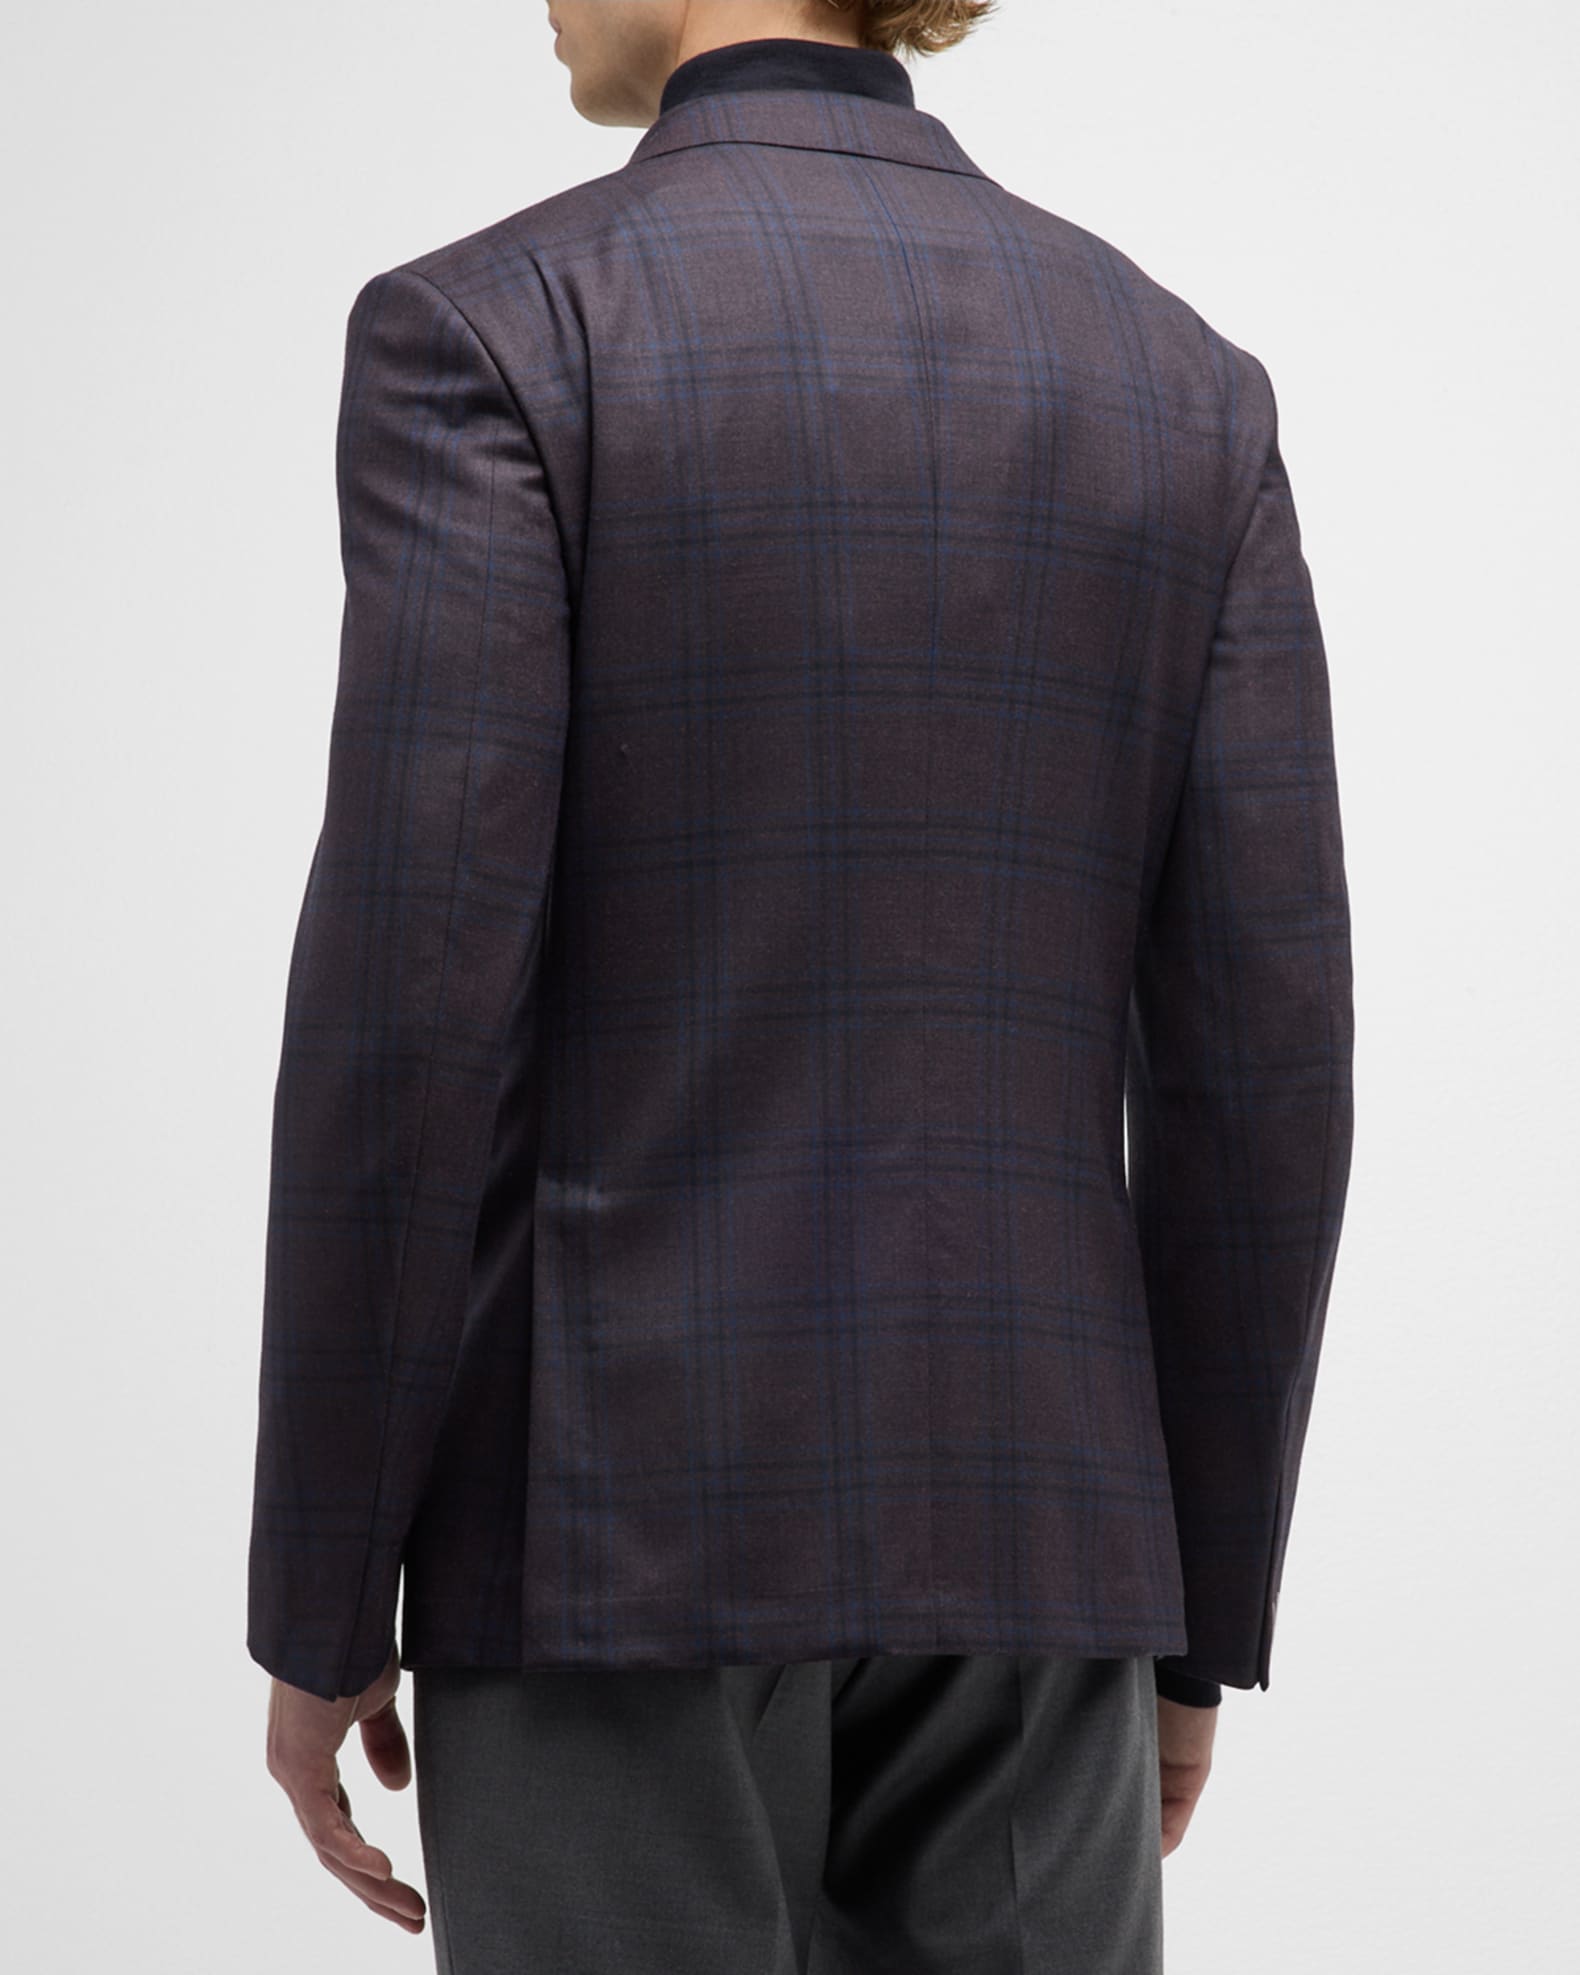 ZEGNA Men's Wool Plaid Sport Coat | Neiman Marcus